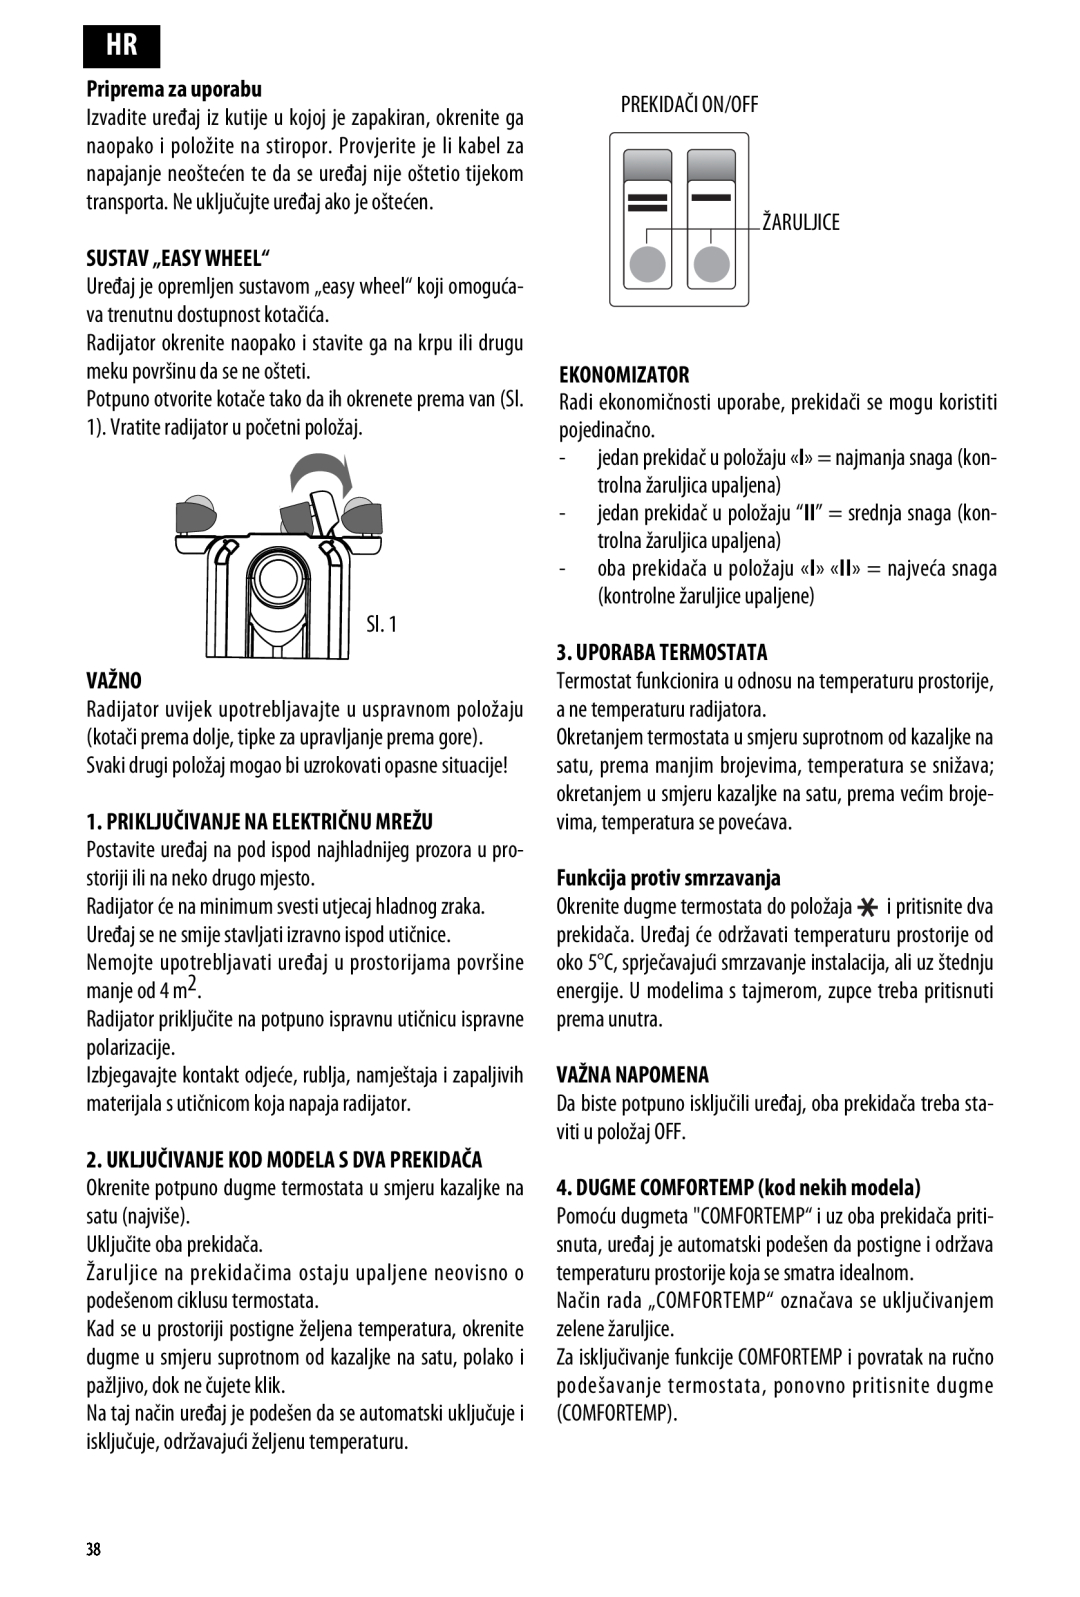 DeLonghi ME 10 manual Priprema za uporabu, Sustav „Easy Wheel“, Važno, Ekonomizator, Uporaba Termostata, Važna Napomena 